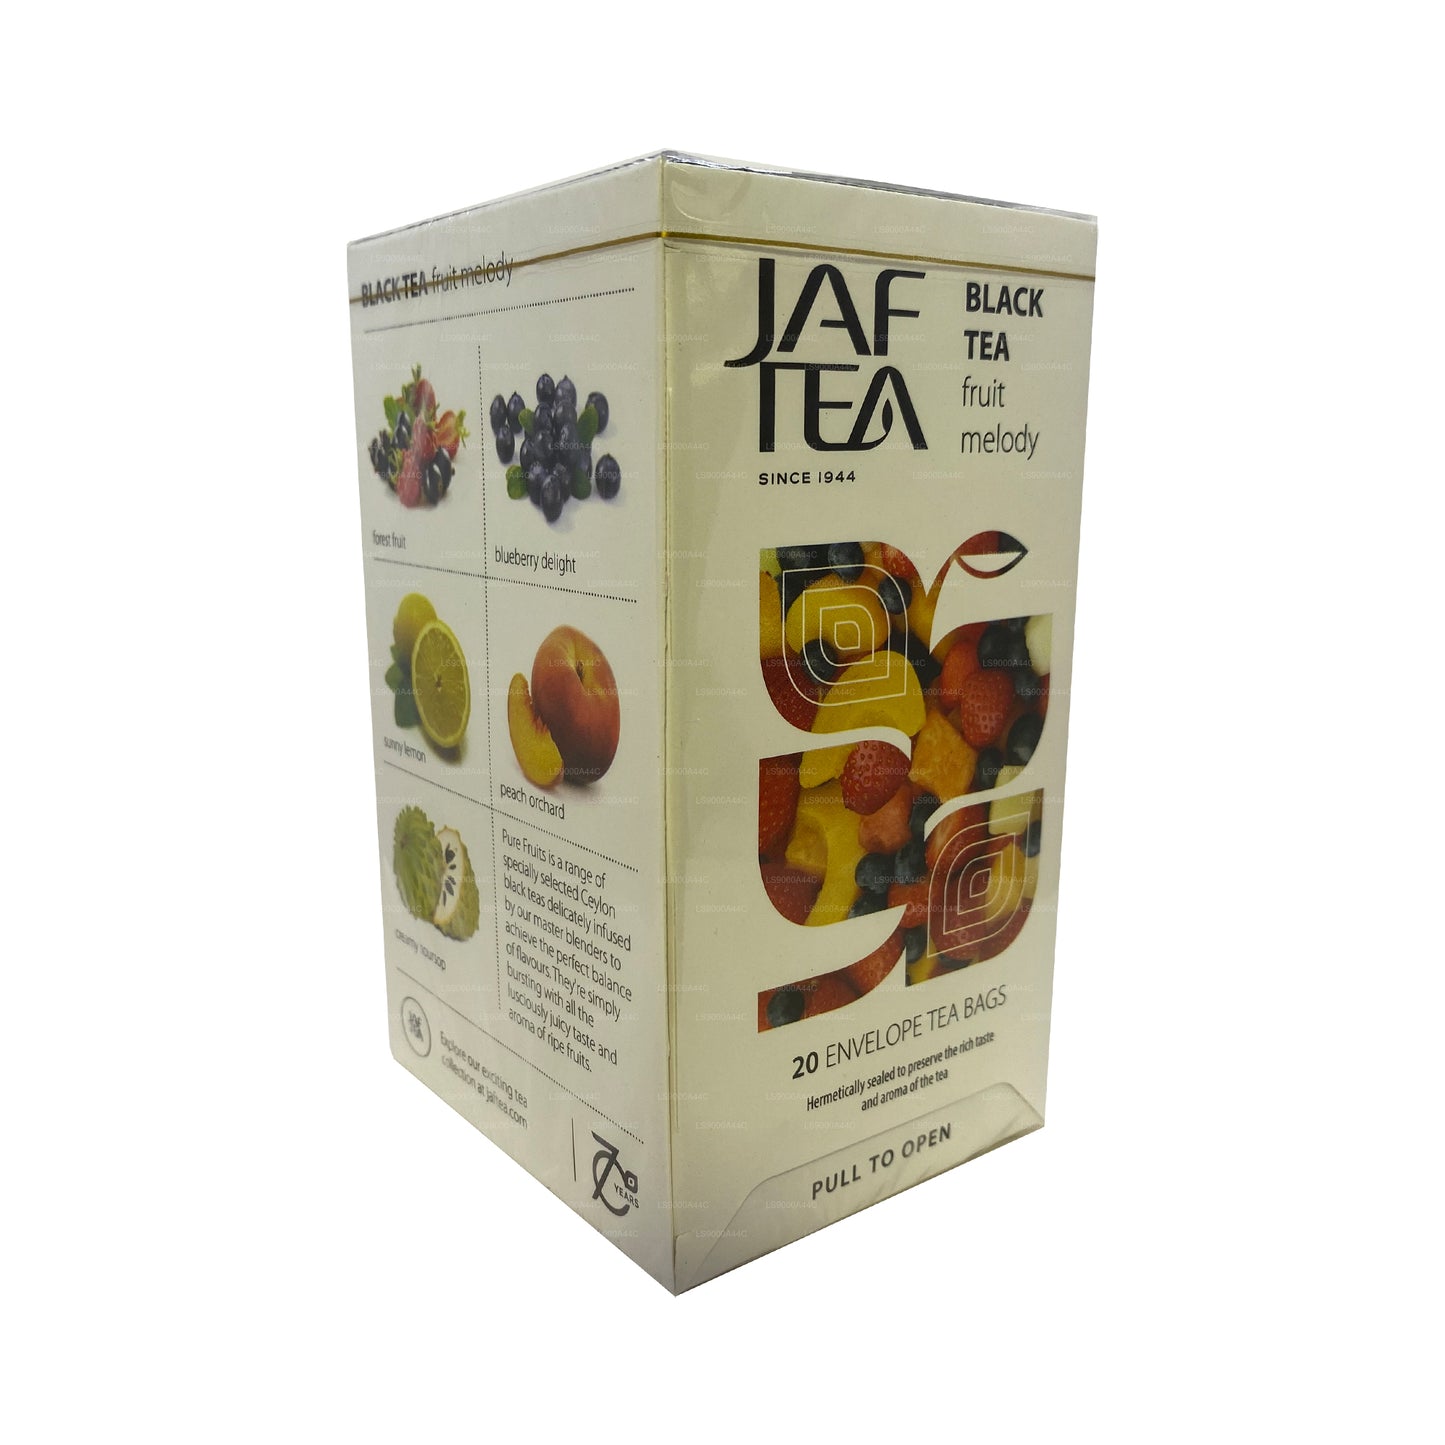 Jaf te ren frukt samling svart te frukt melodi (30g) 20 tepåsar